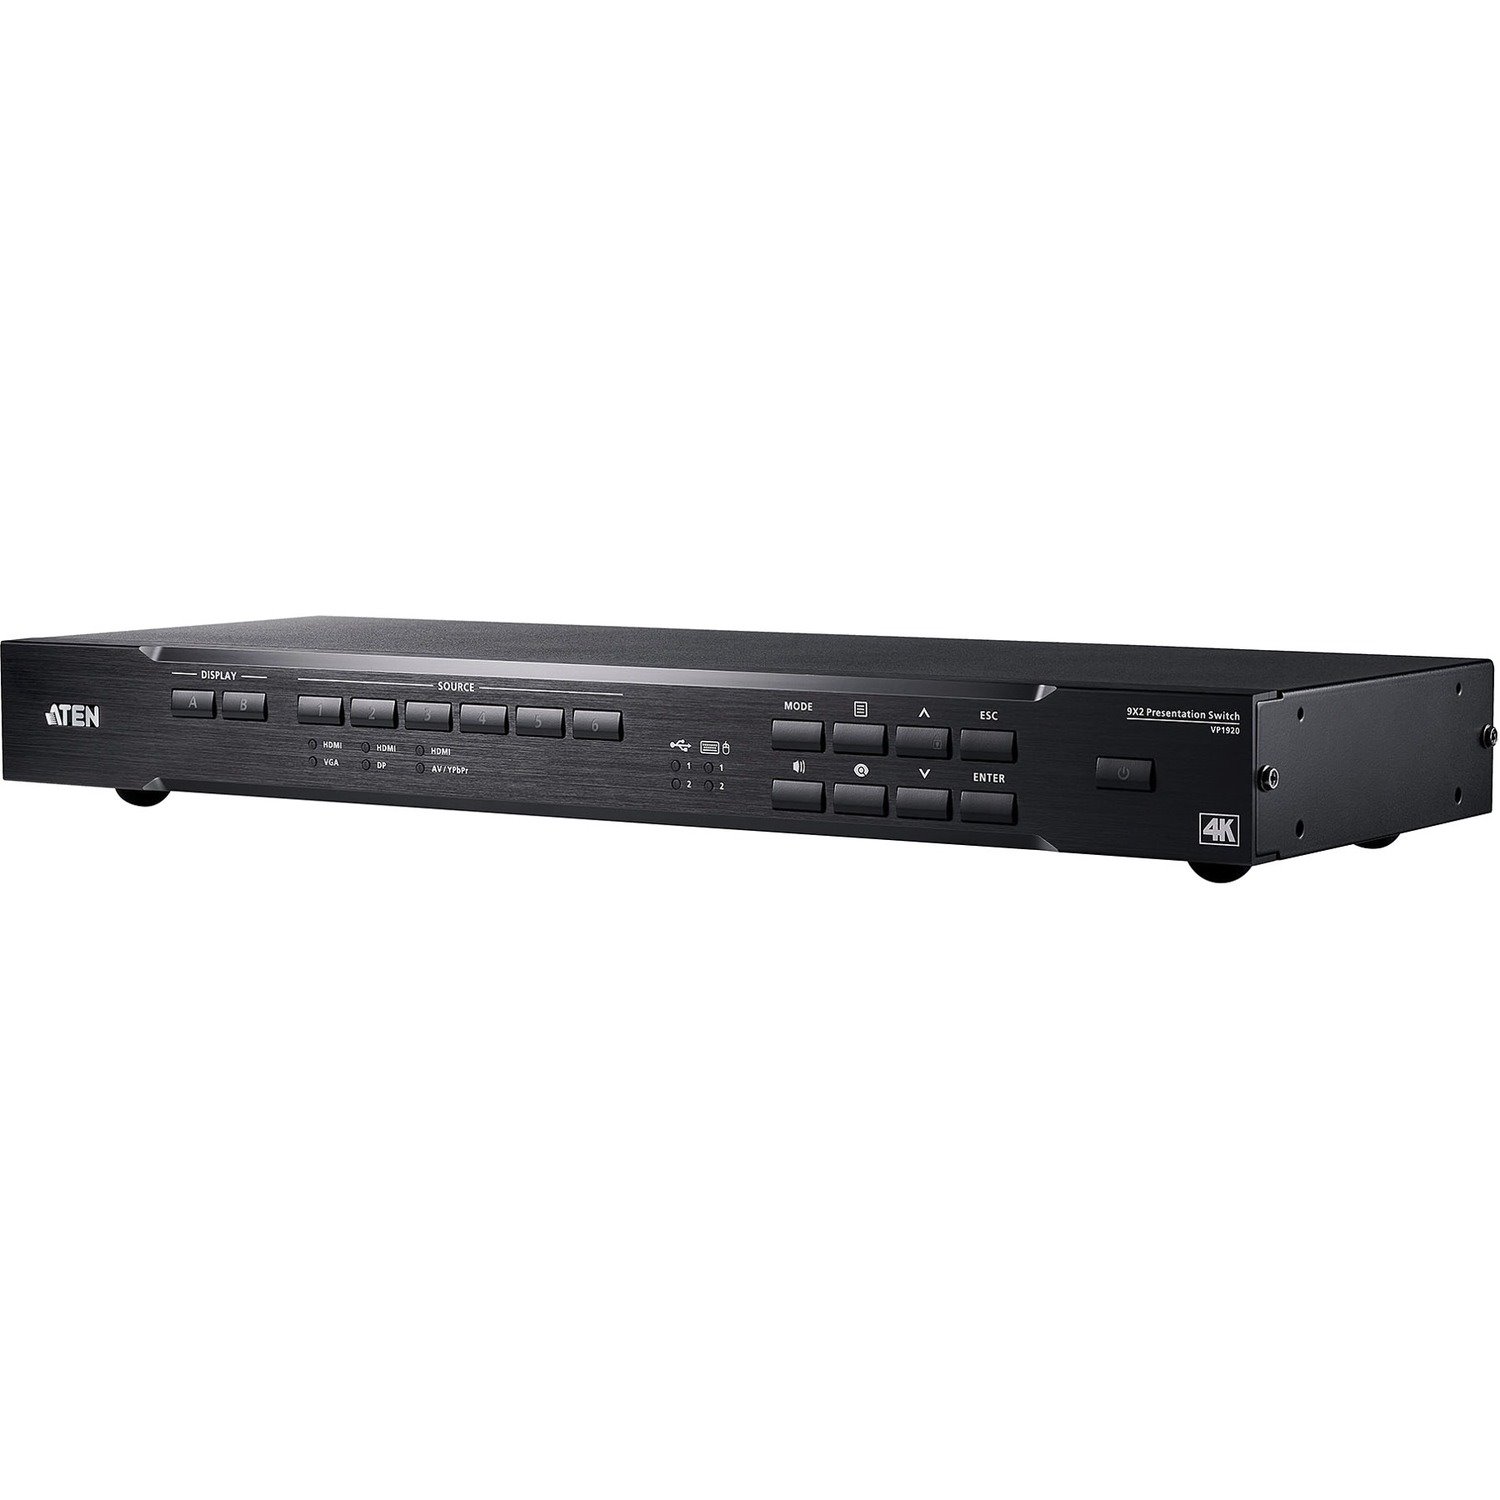 ATEN VP1920 Audio/Video Switchbox - Cable